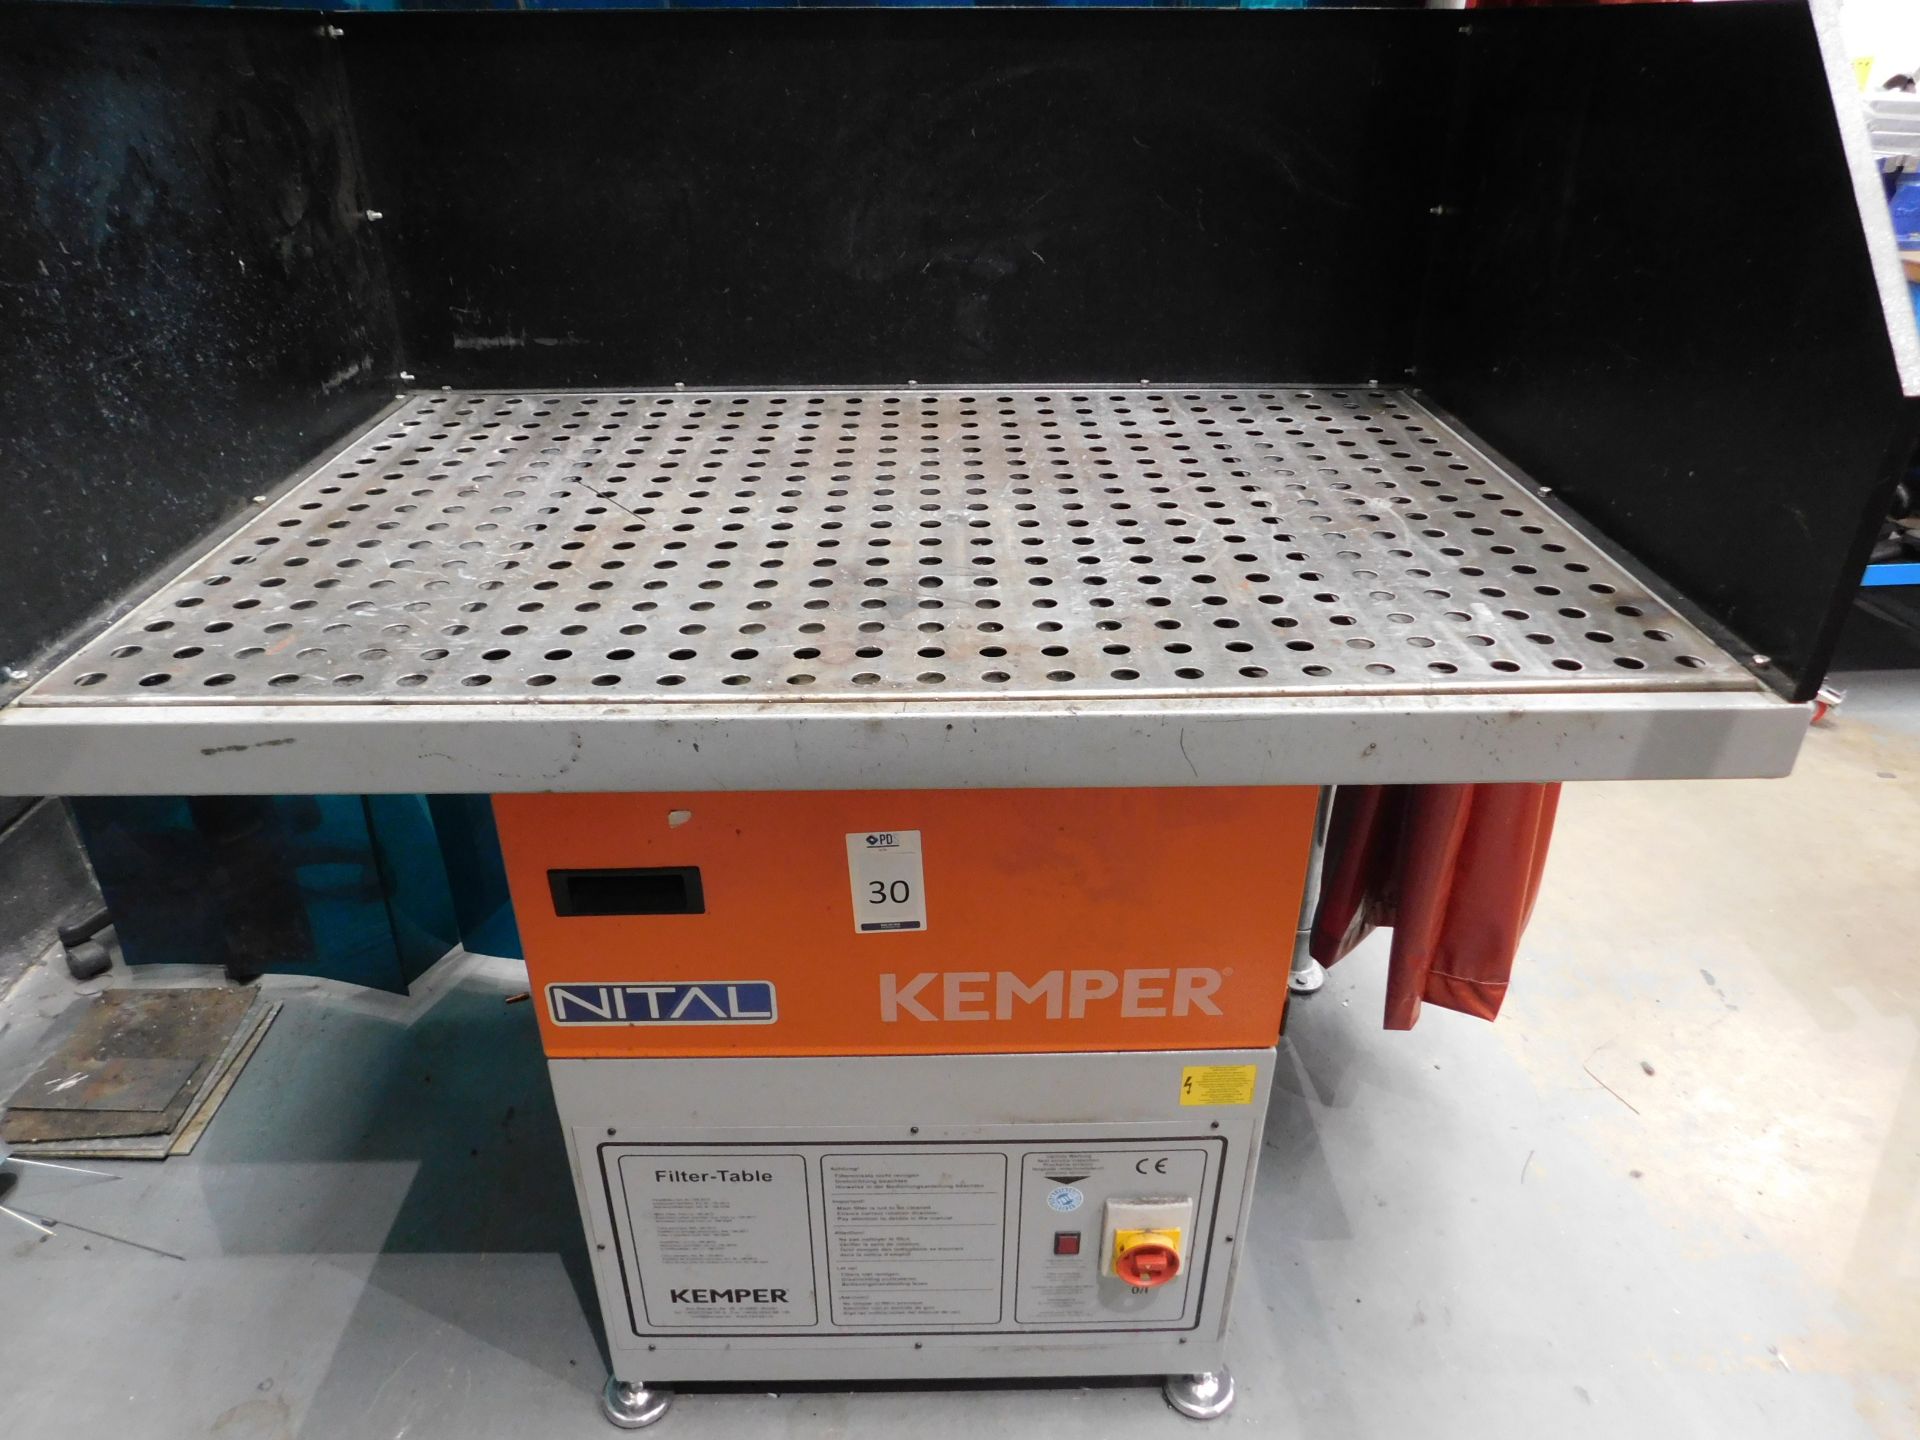 Kemper Welding Table & Filter Unit (2015), serial number 150800109 - Image 2 of 4